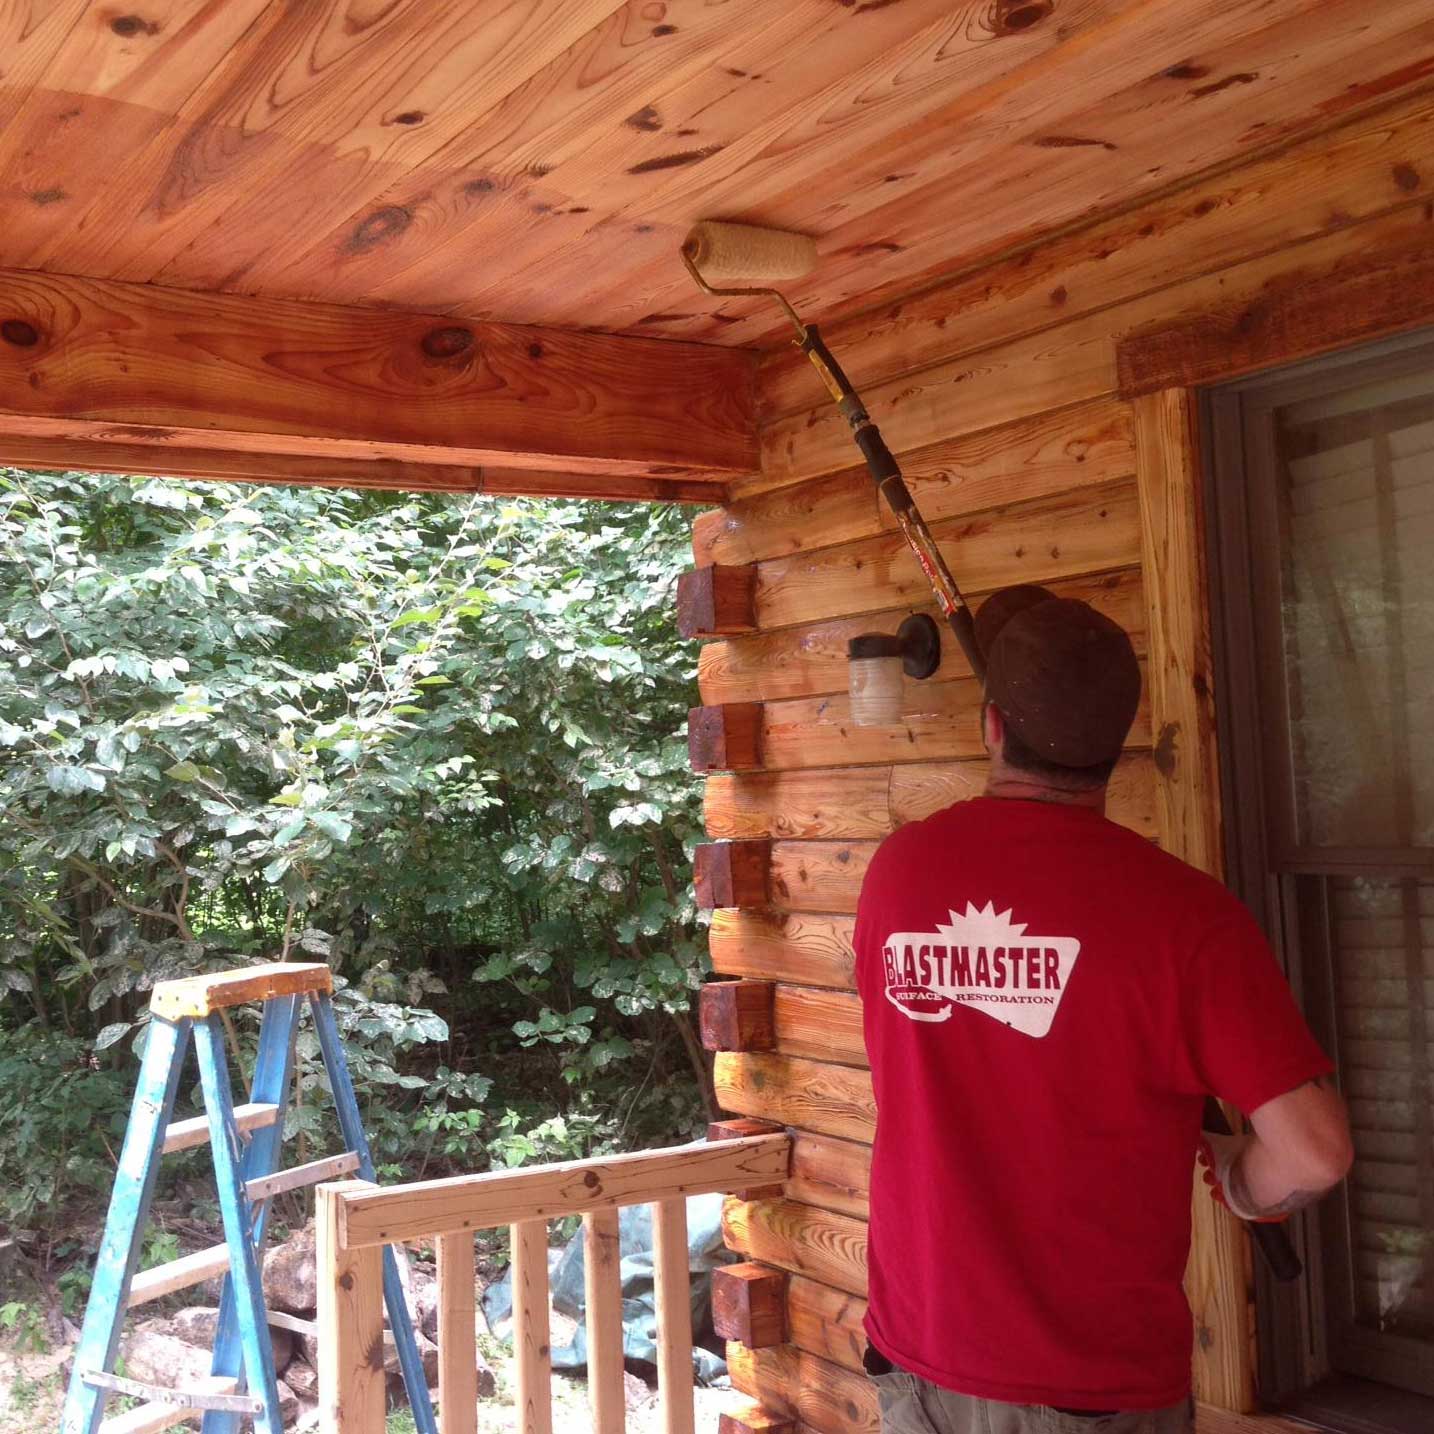 Staining log cabin